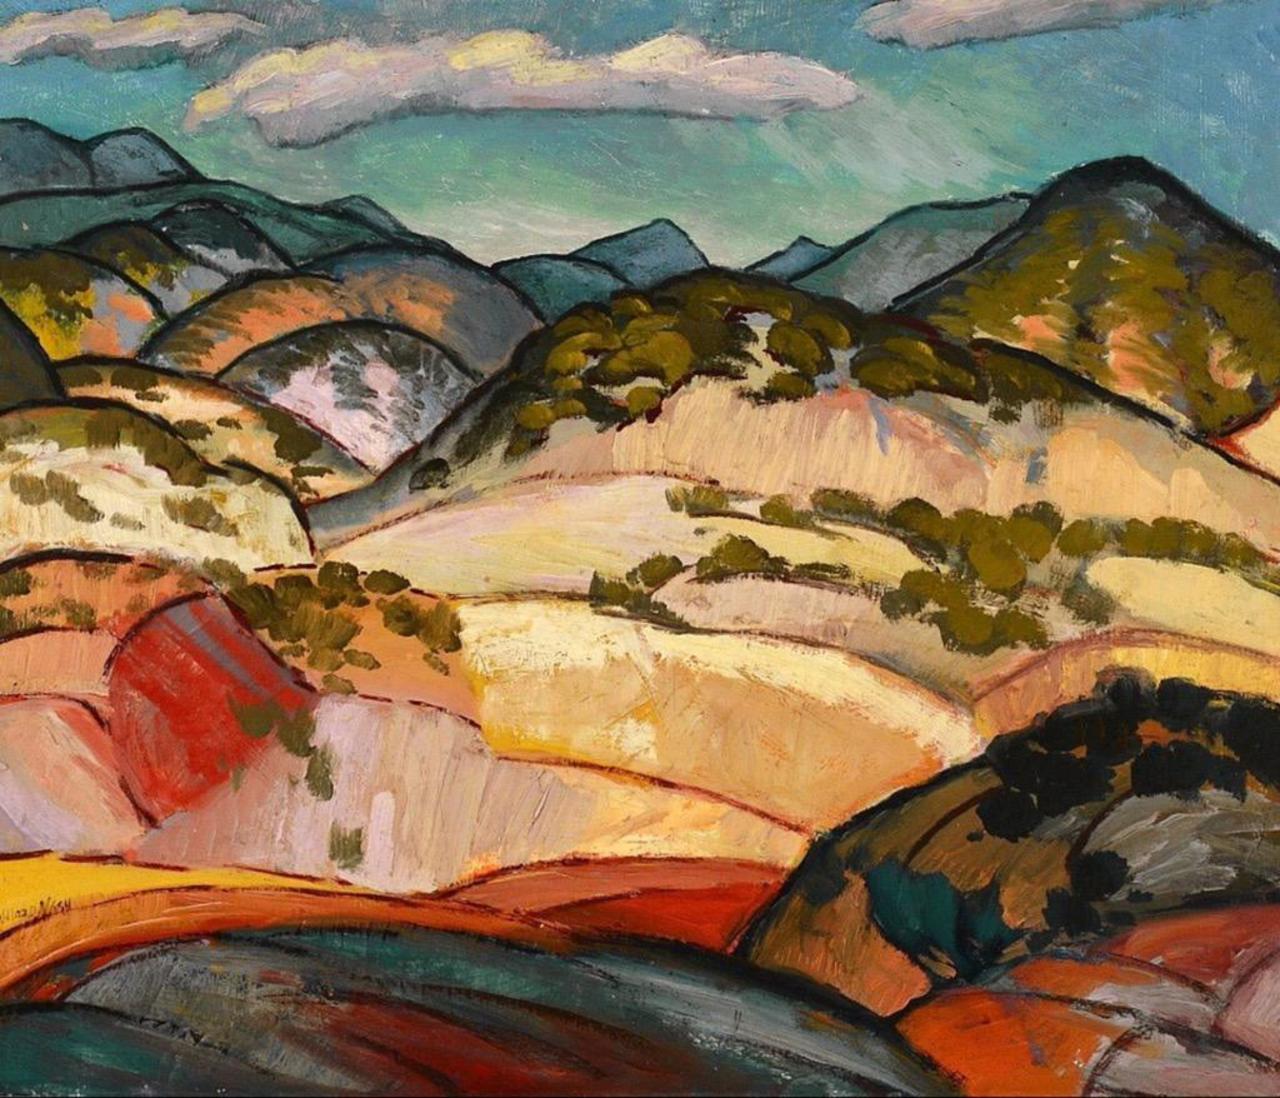 Santa Fe Landscape, 1930 by Willard Nash #art #painting http://t.co/V0jknmlGwT RT @antoinelevan @ghani_b @BTekeyan